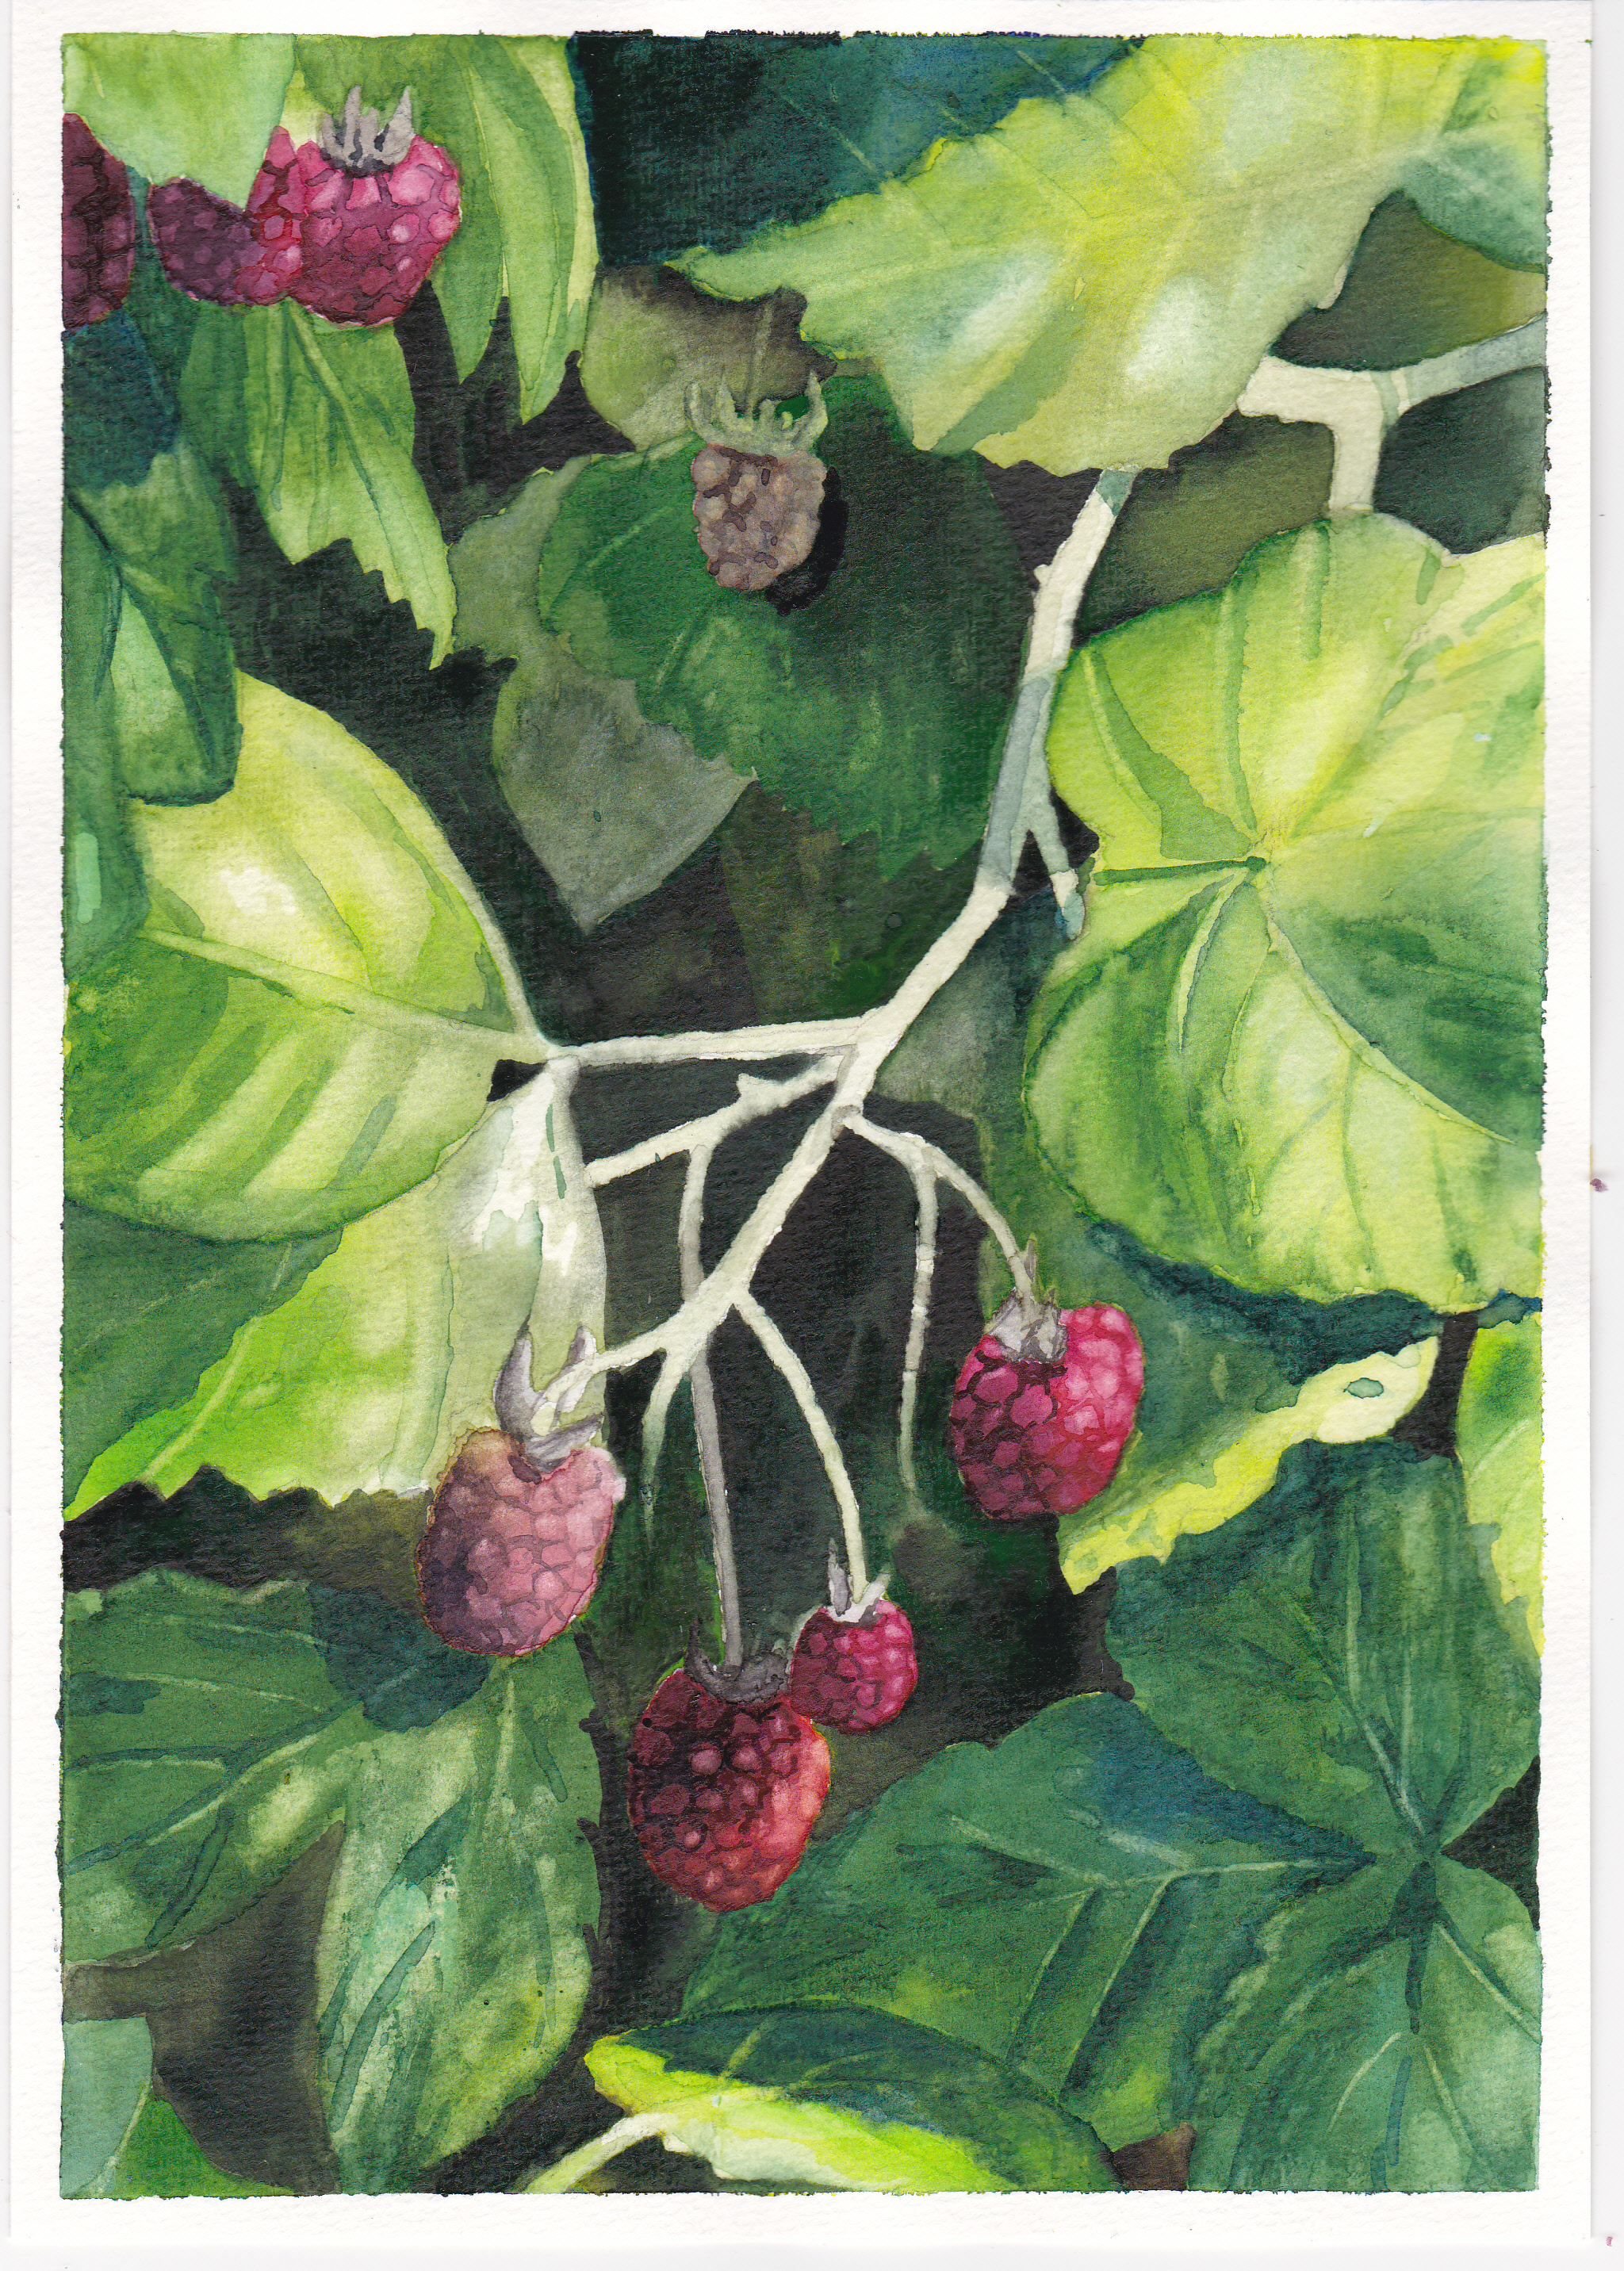 Himbeeren. Aquarell, 17 x 24 cm. Raspberries. Watercolours, 6.7" x 9.5".